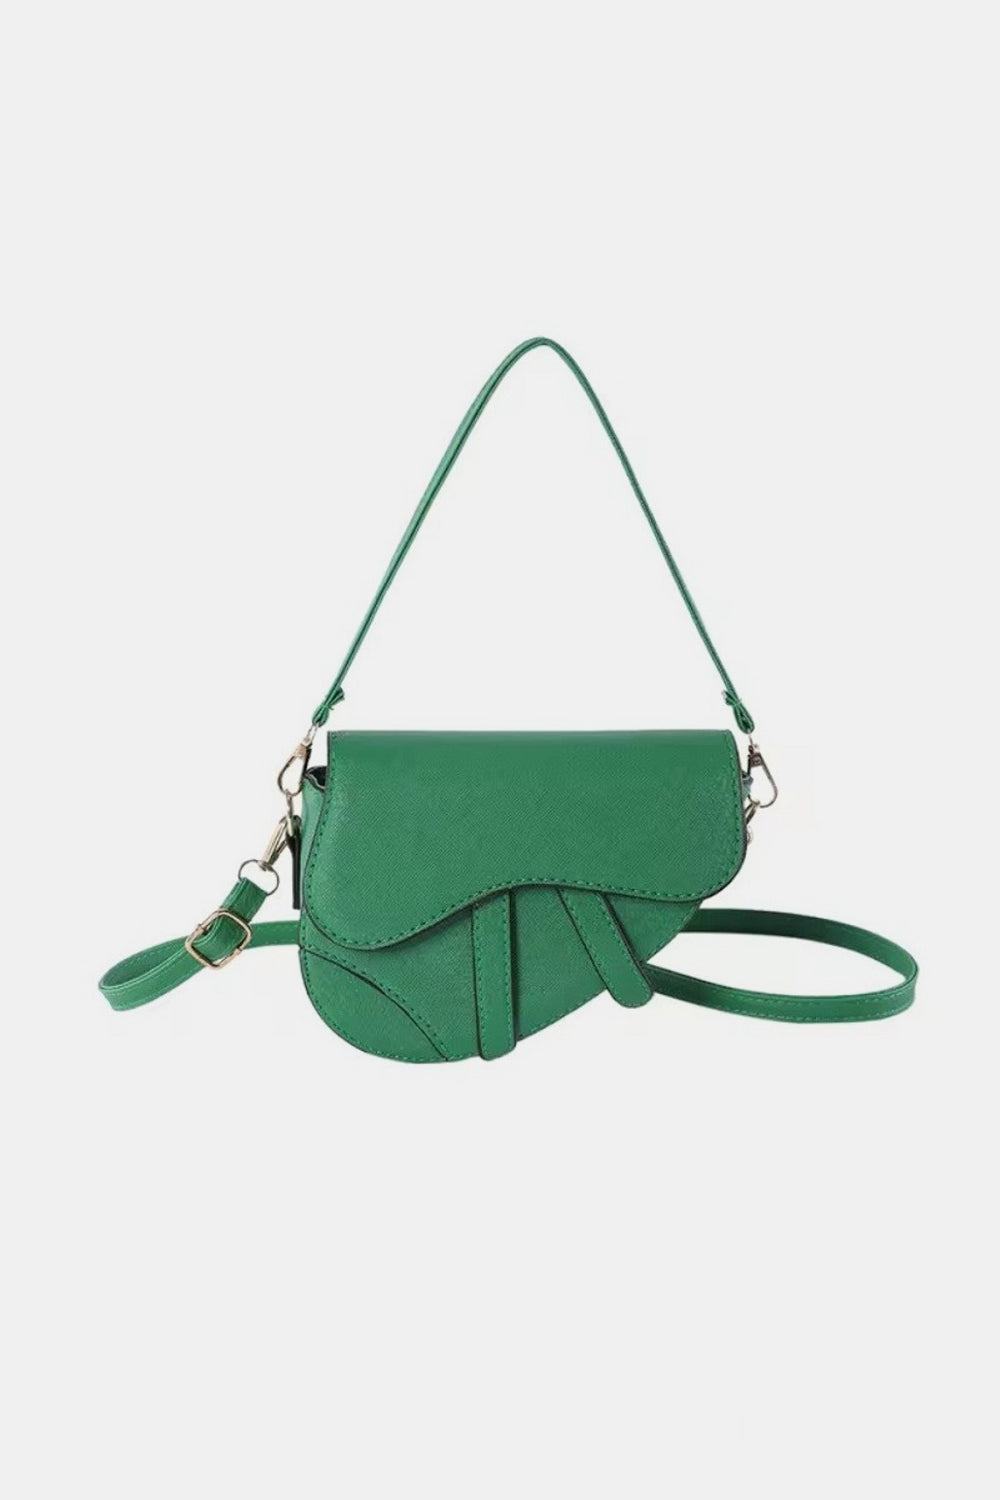 Zenana Zenana Crossbody Saddle Bag K Green One Size